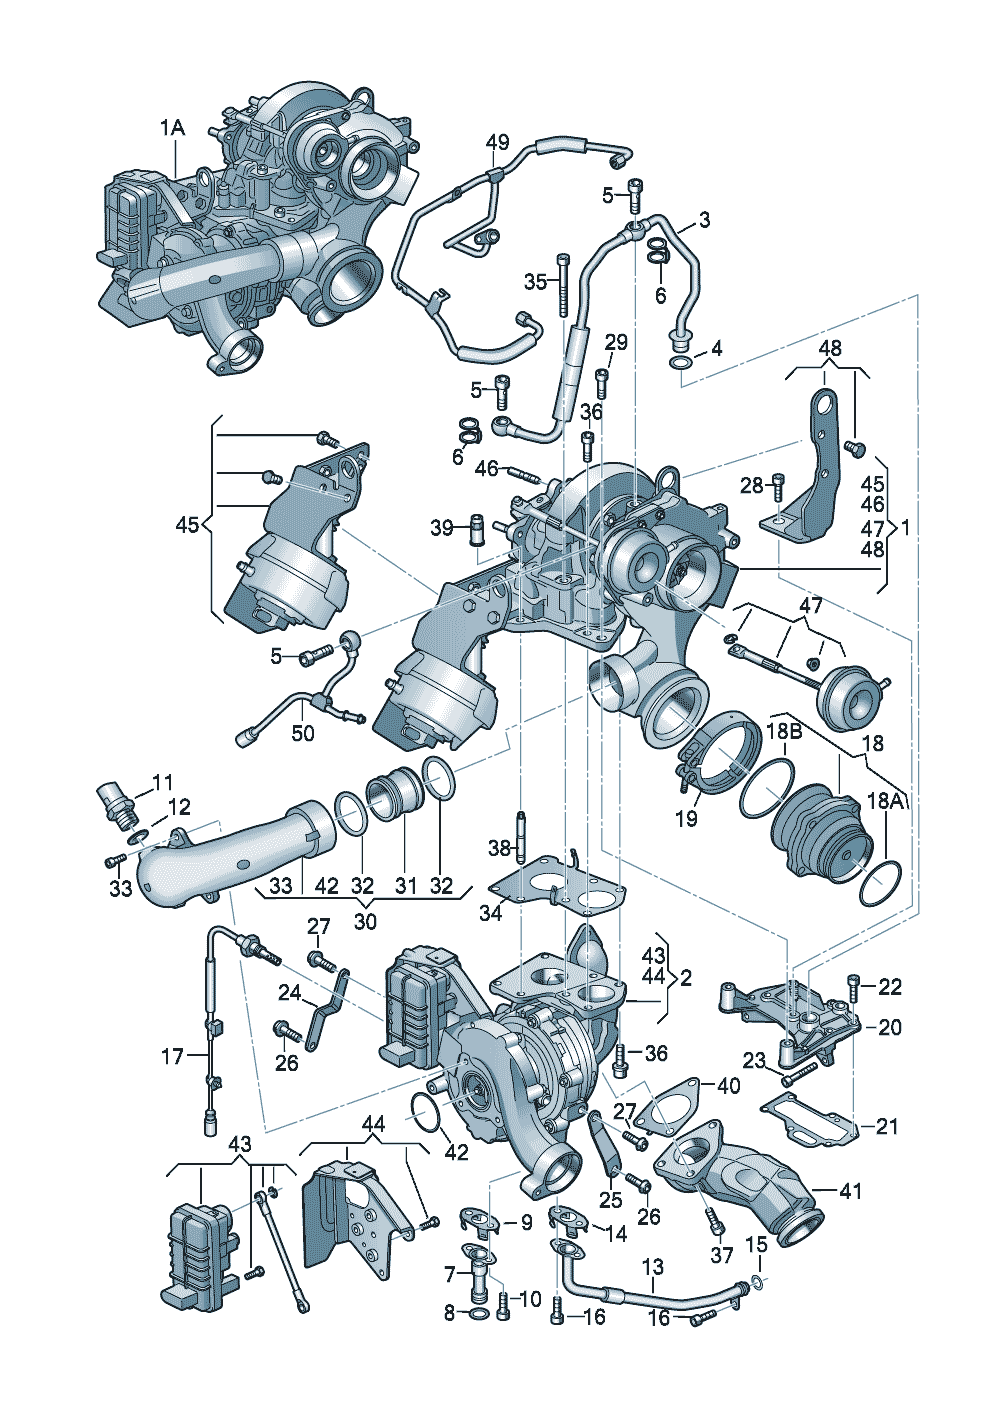 Exhaust gas turbocharger 3.0Ltr. - Audi A7 Sportback - a7